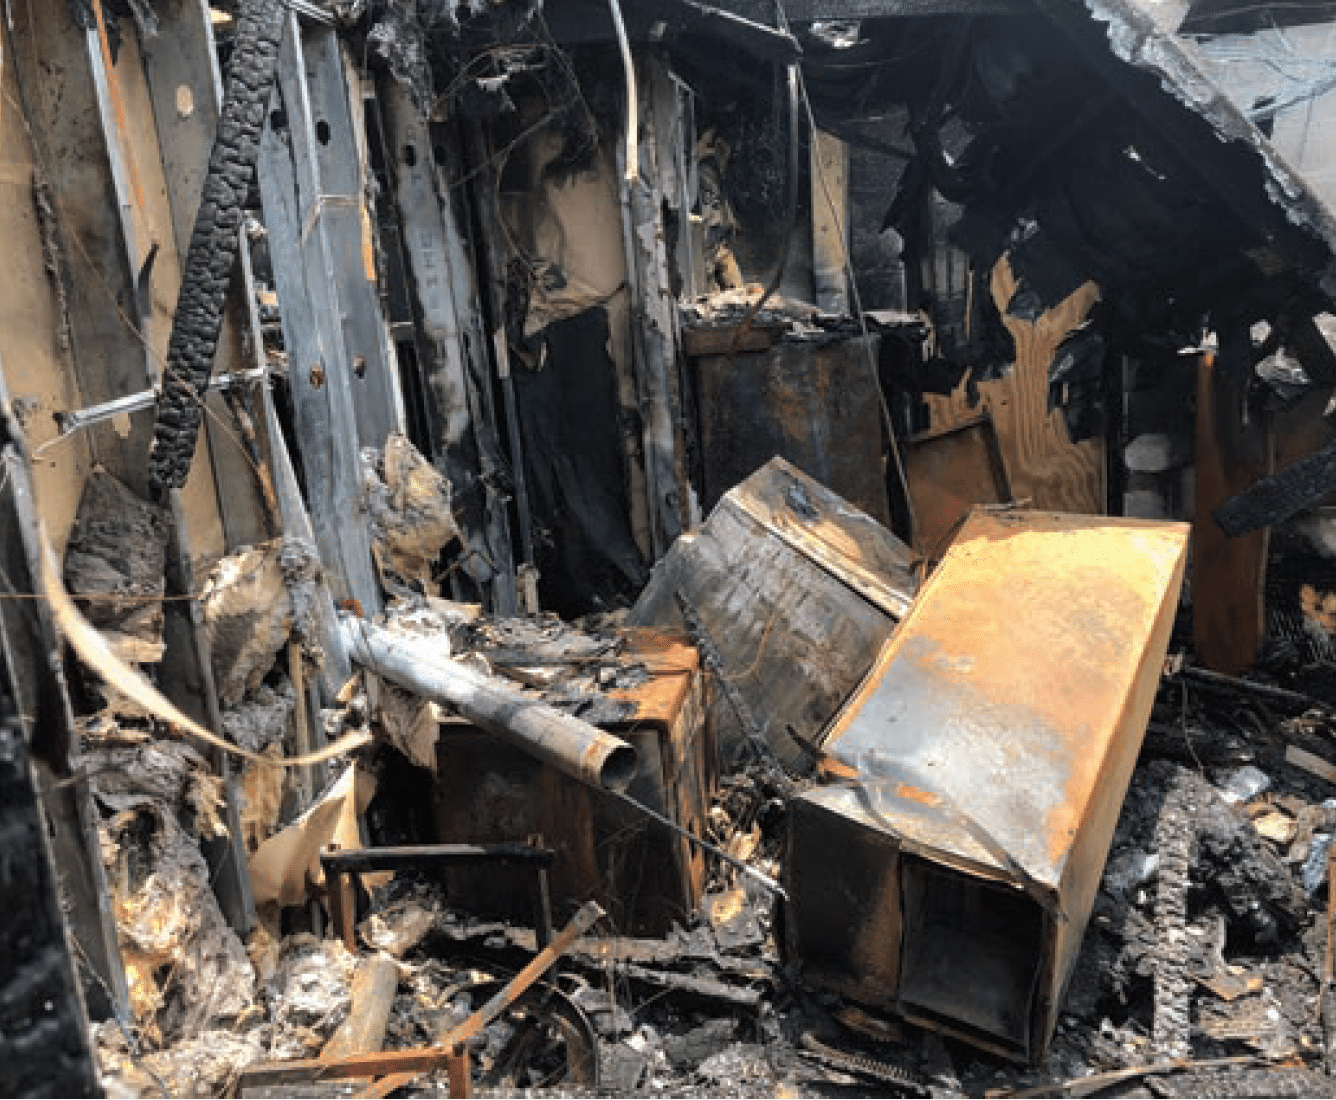 Burnt Kitchen Appliances Fallen Into The Ashes